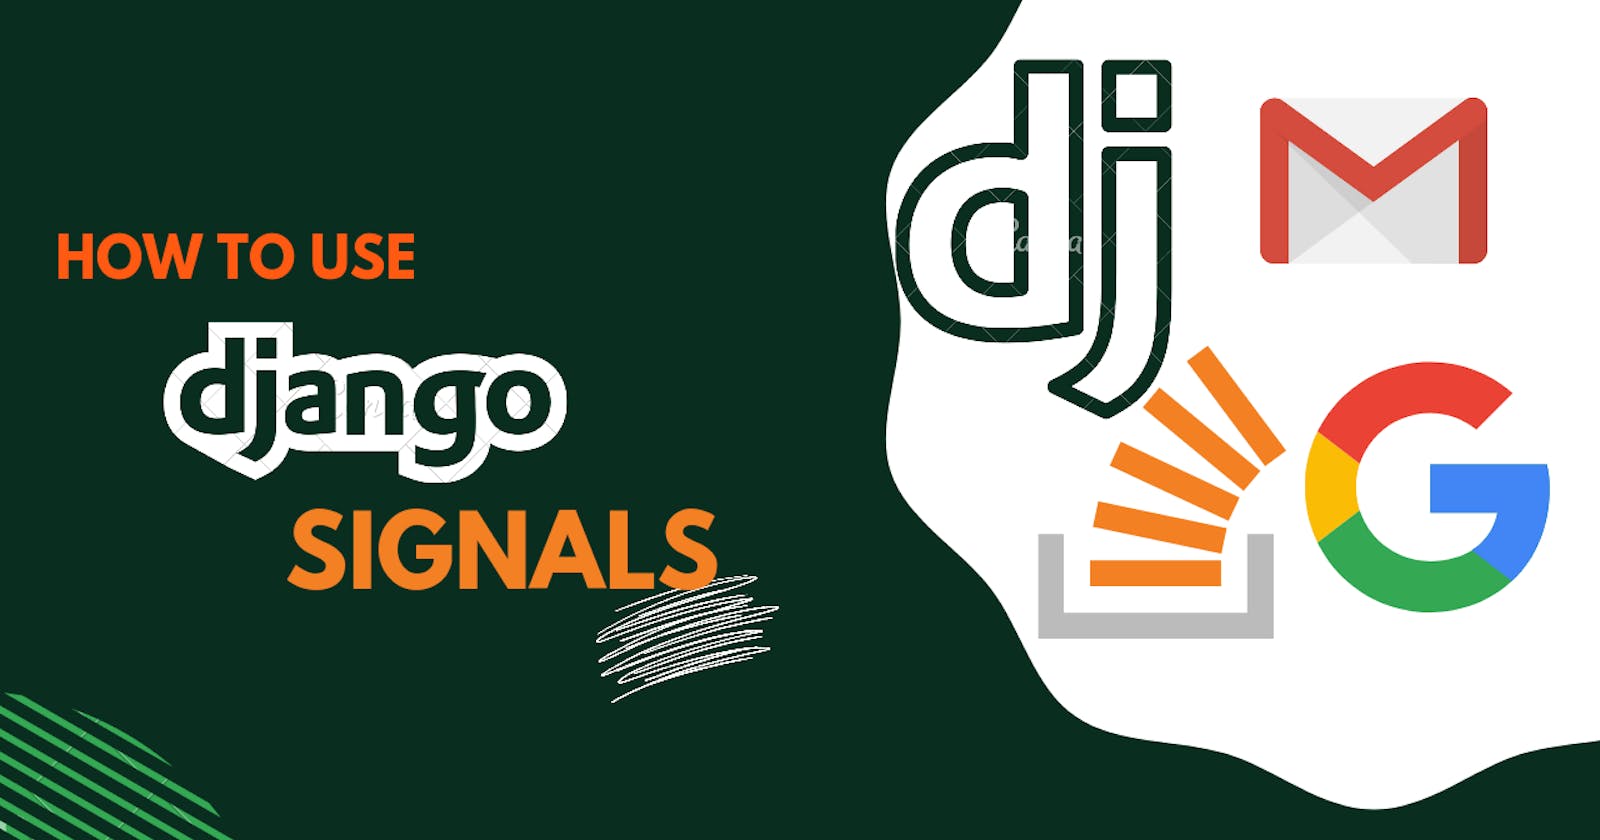 How To Use Django Signals